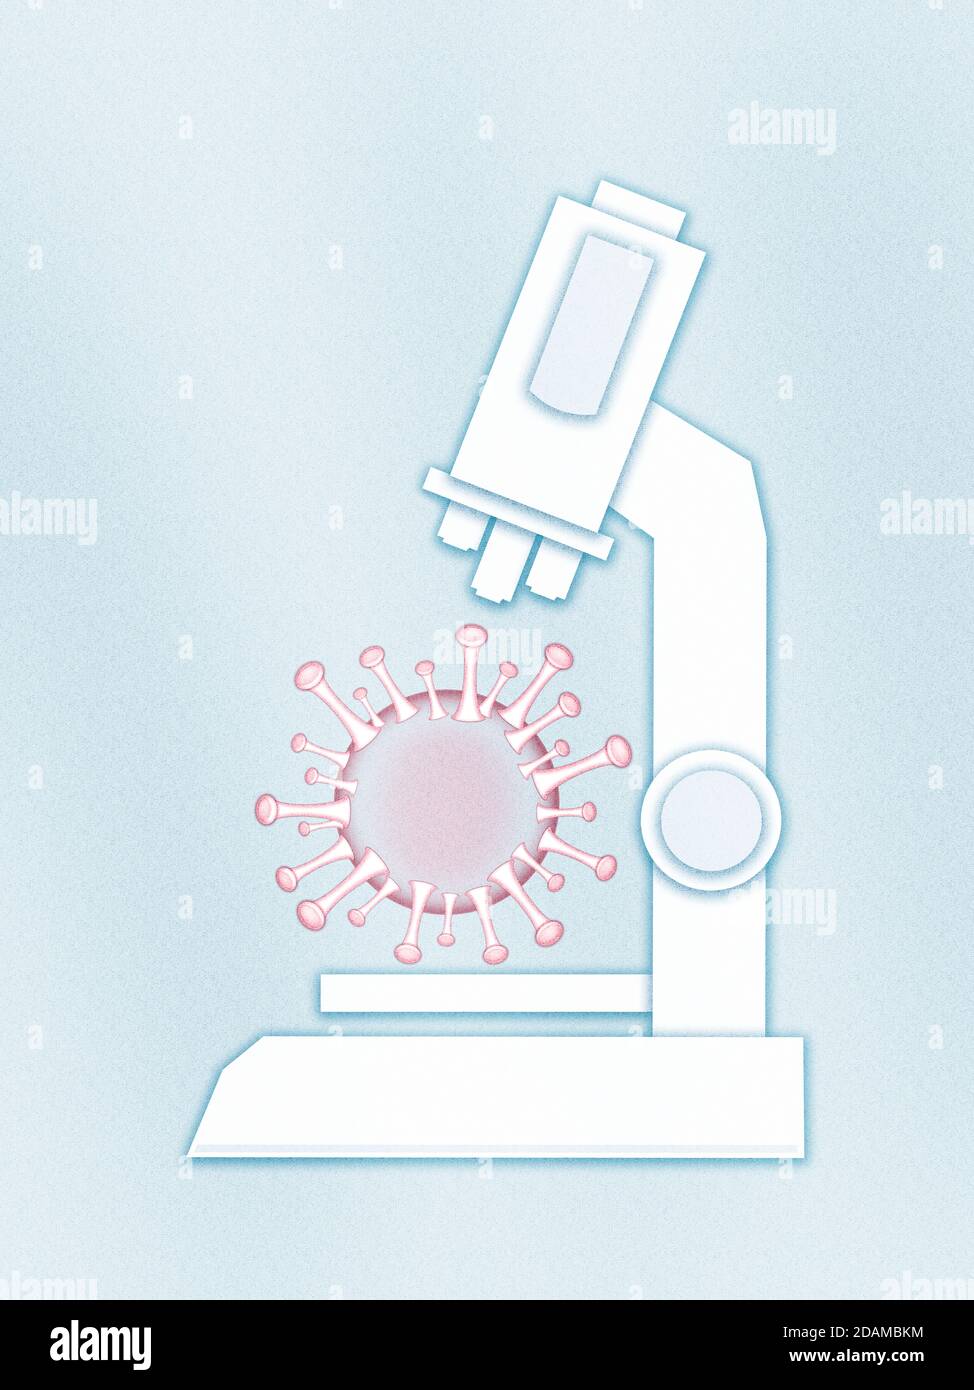 Microscope with covid-19 virus, illustration. Stock Photo